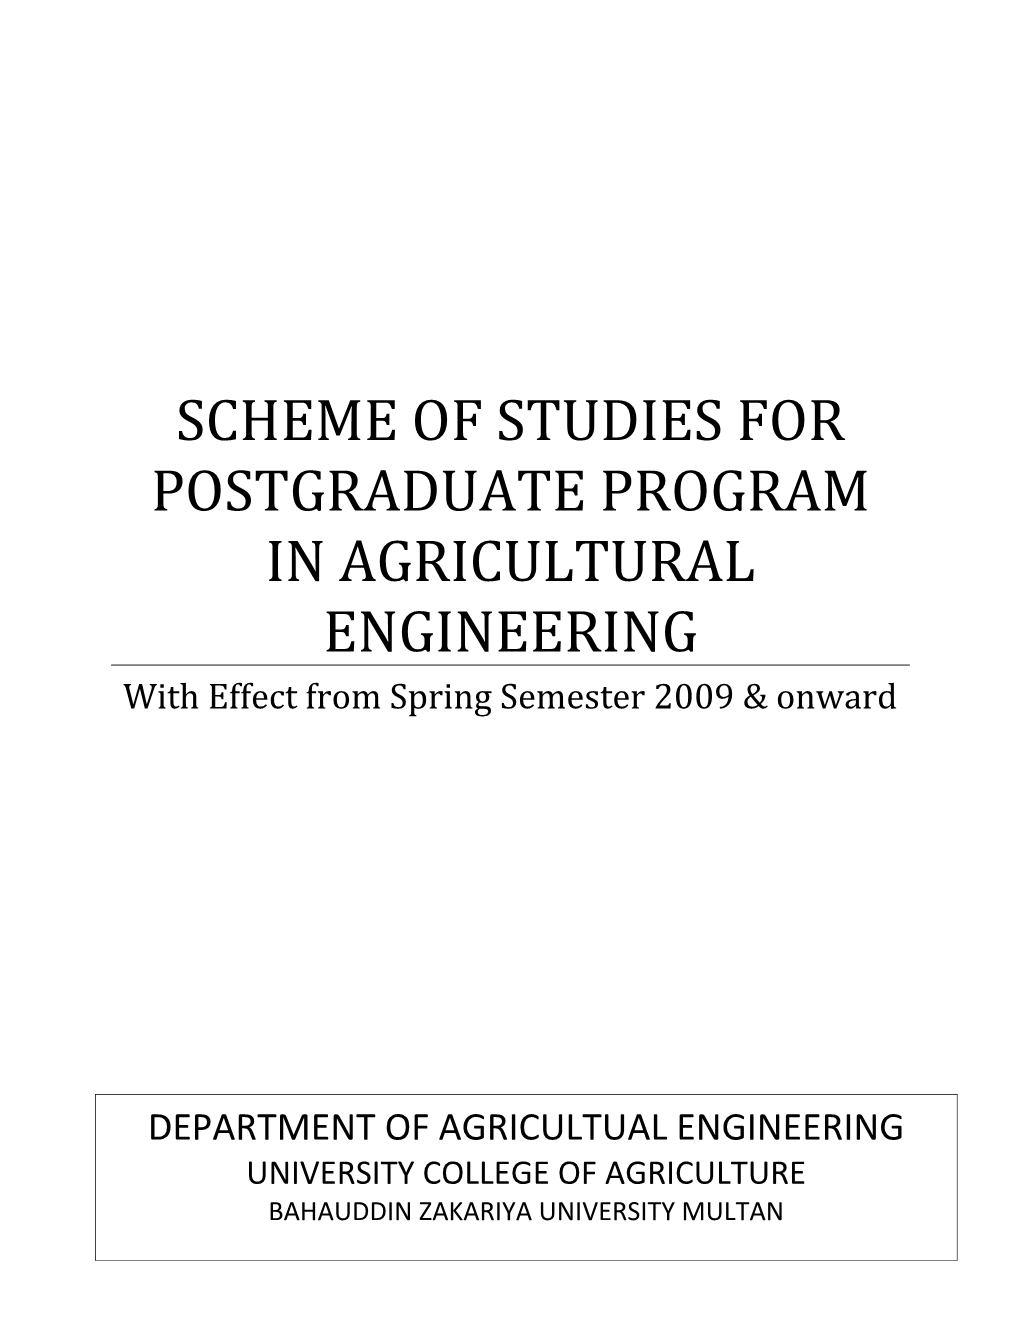 Scheme of Studies for Postgraduate Program in Agricultural Engineering